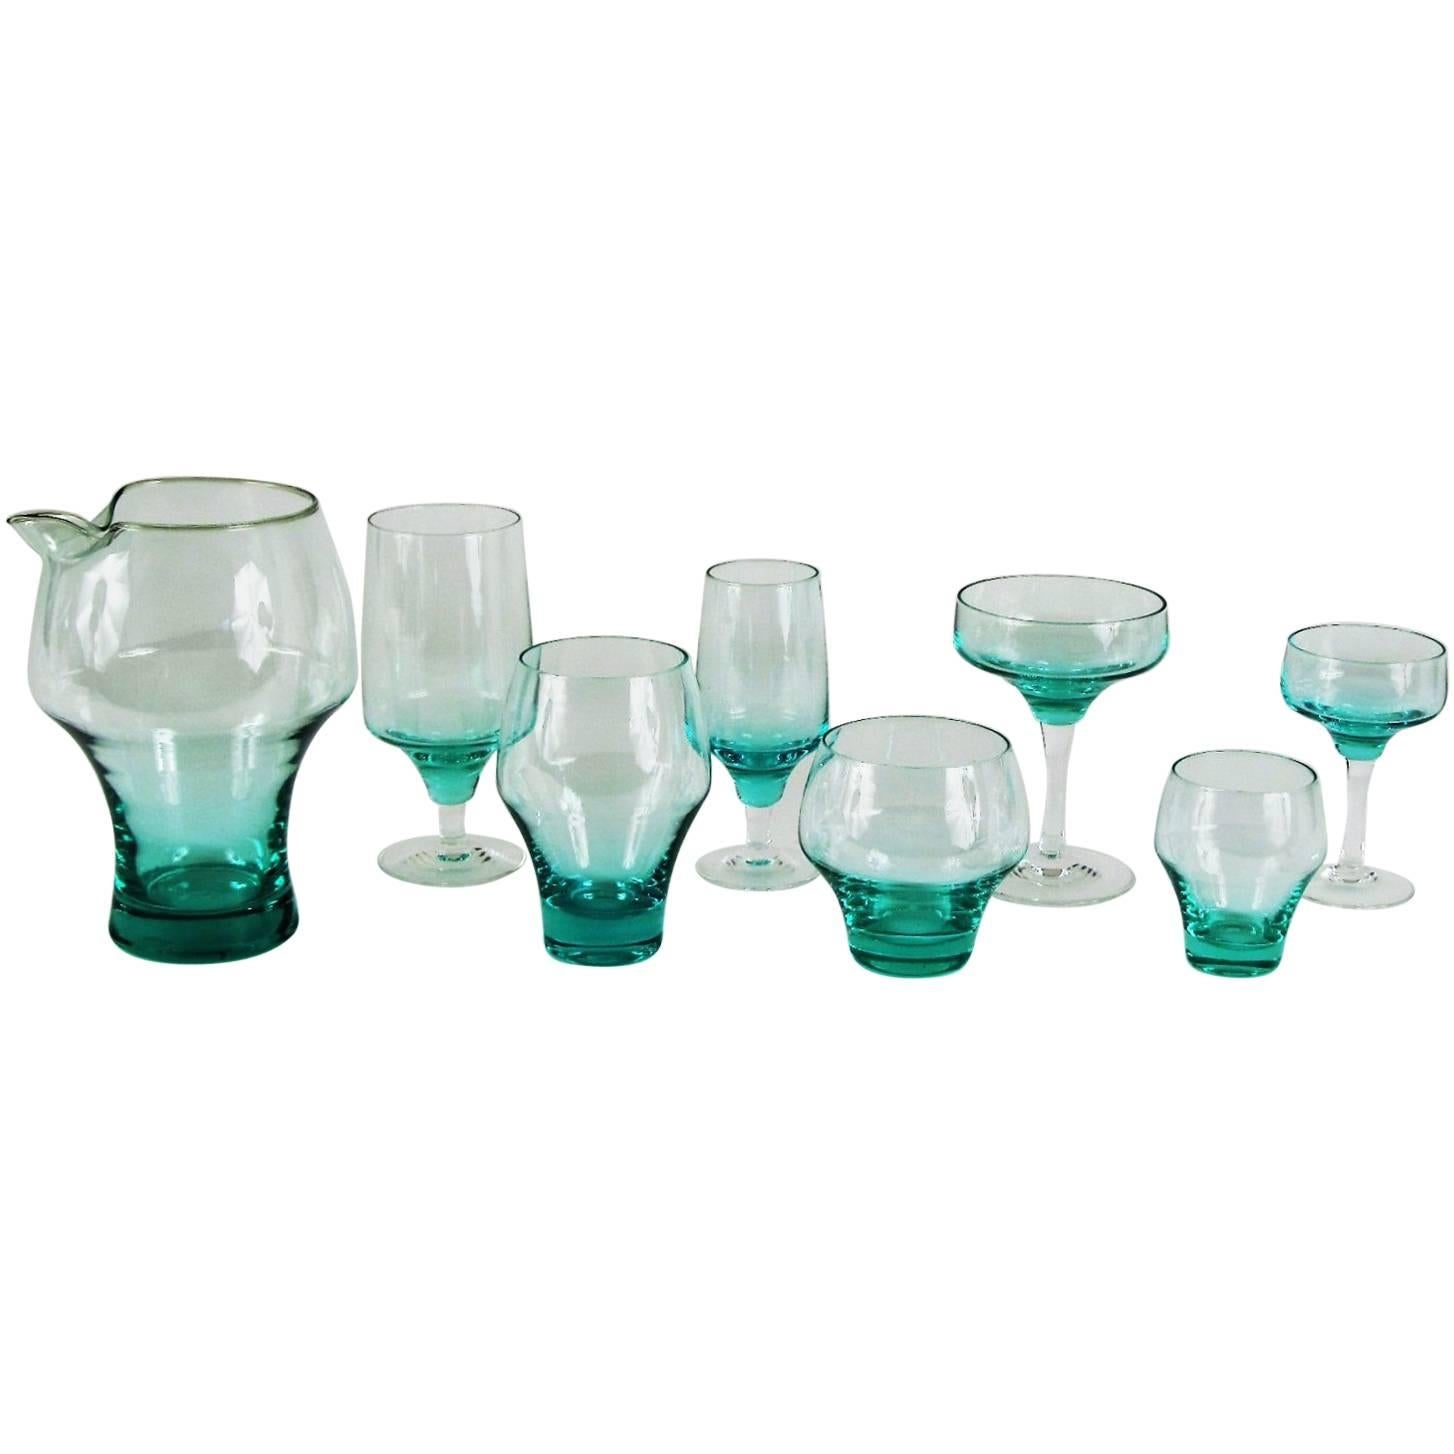 57-Piece Complete Set of Sasaki Aqua Harmony Cocktail Glassware